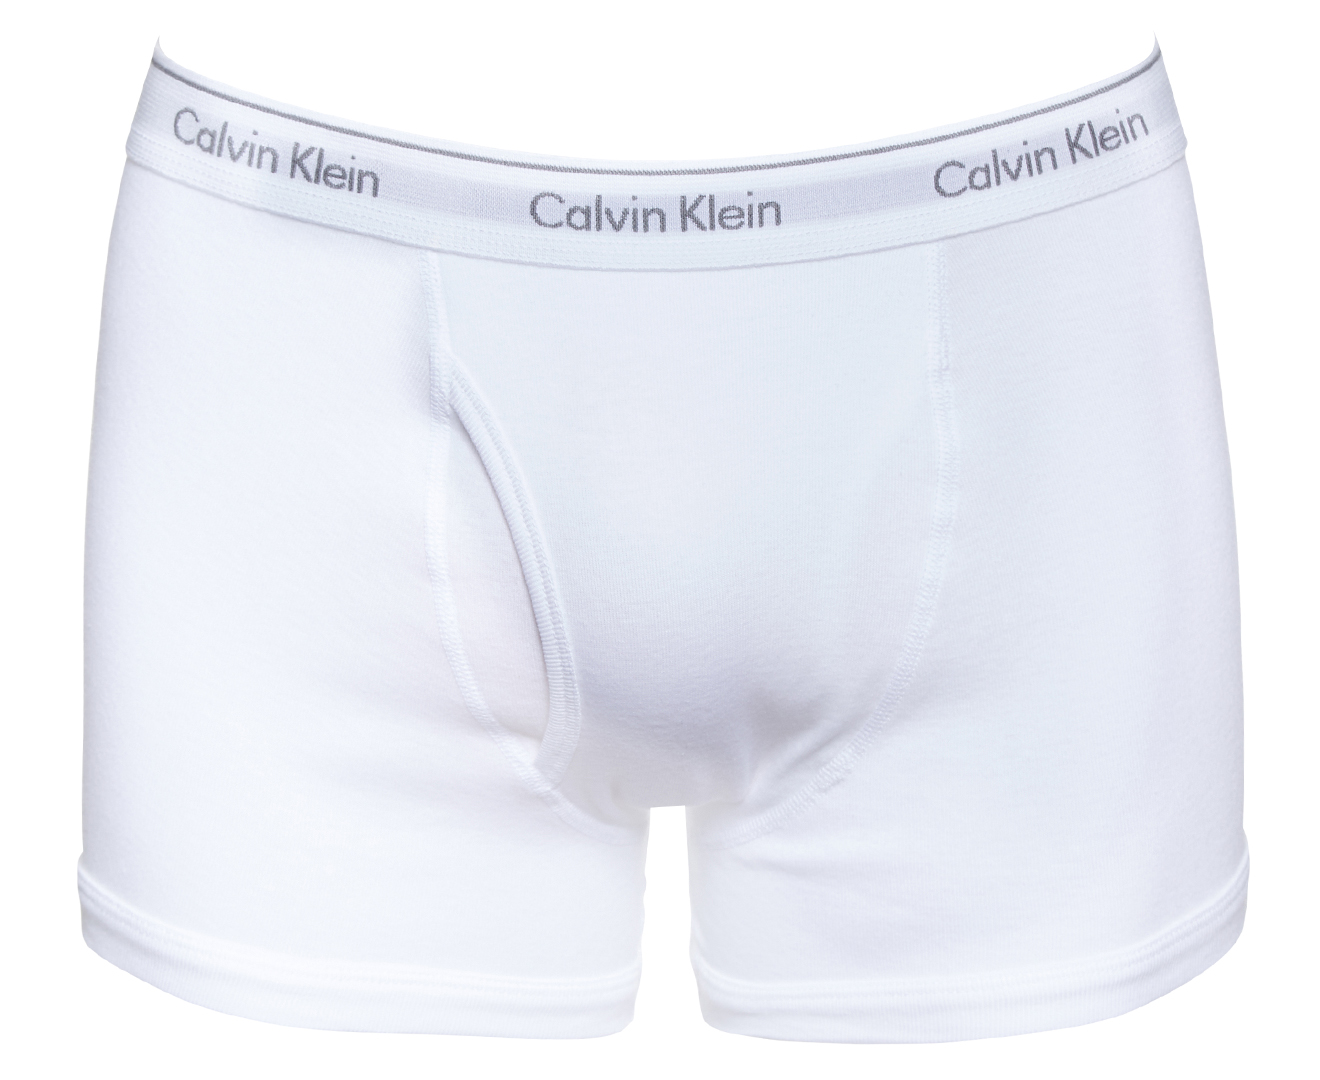 Calvin Klein Men's Cotton Classics Trunks 3-Pack - Black/Grey Heather/White  